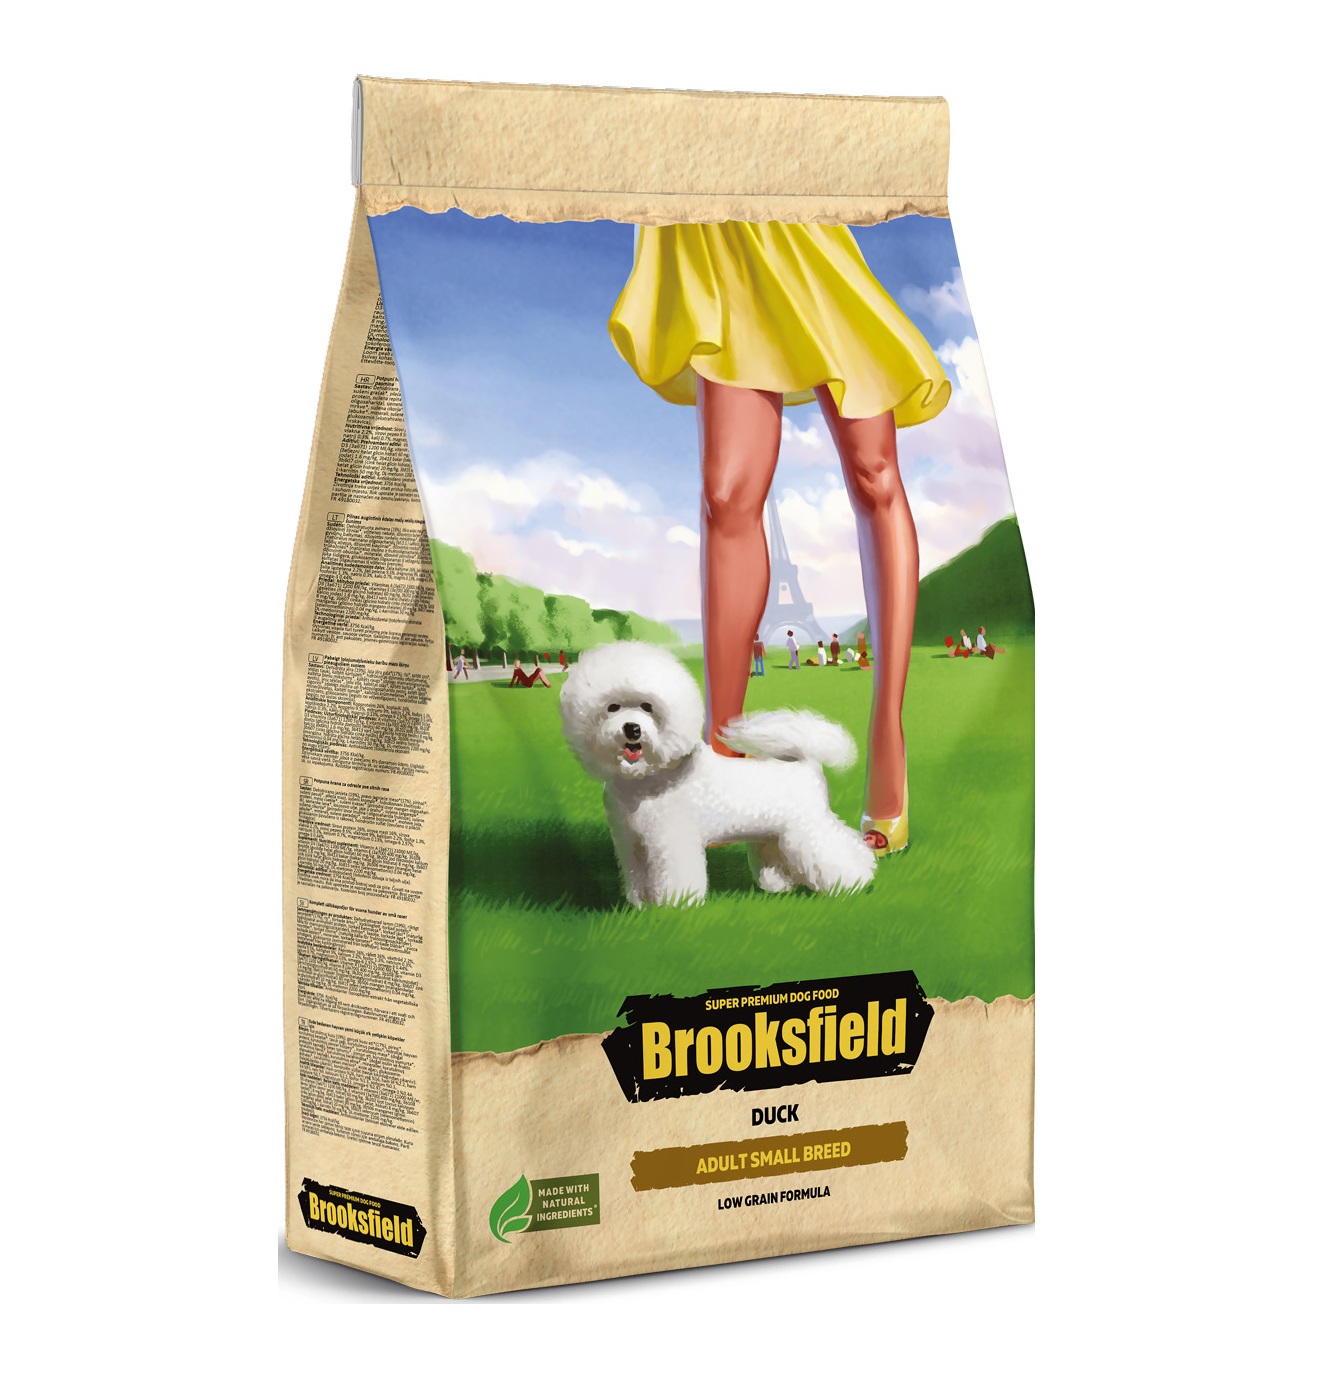 Бруксфилд 1,5кг - Утка - для Мелких собак (Brooksfield)